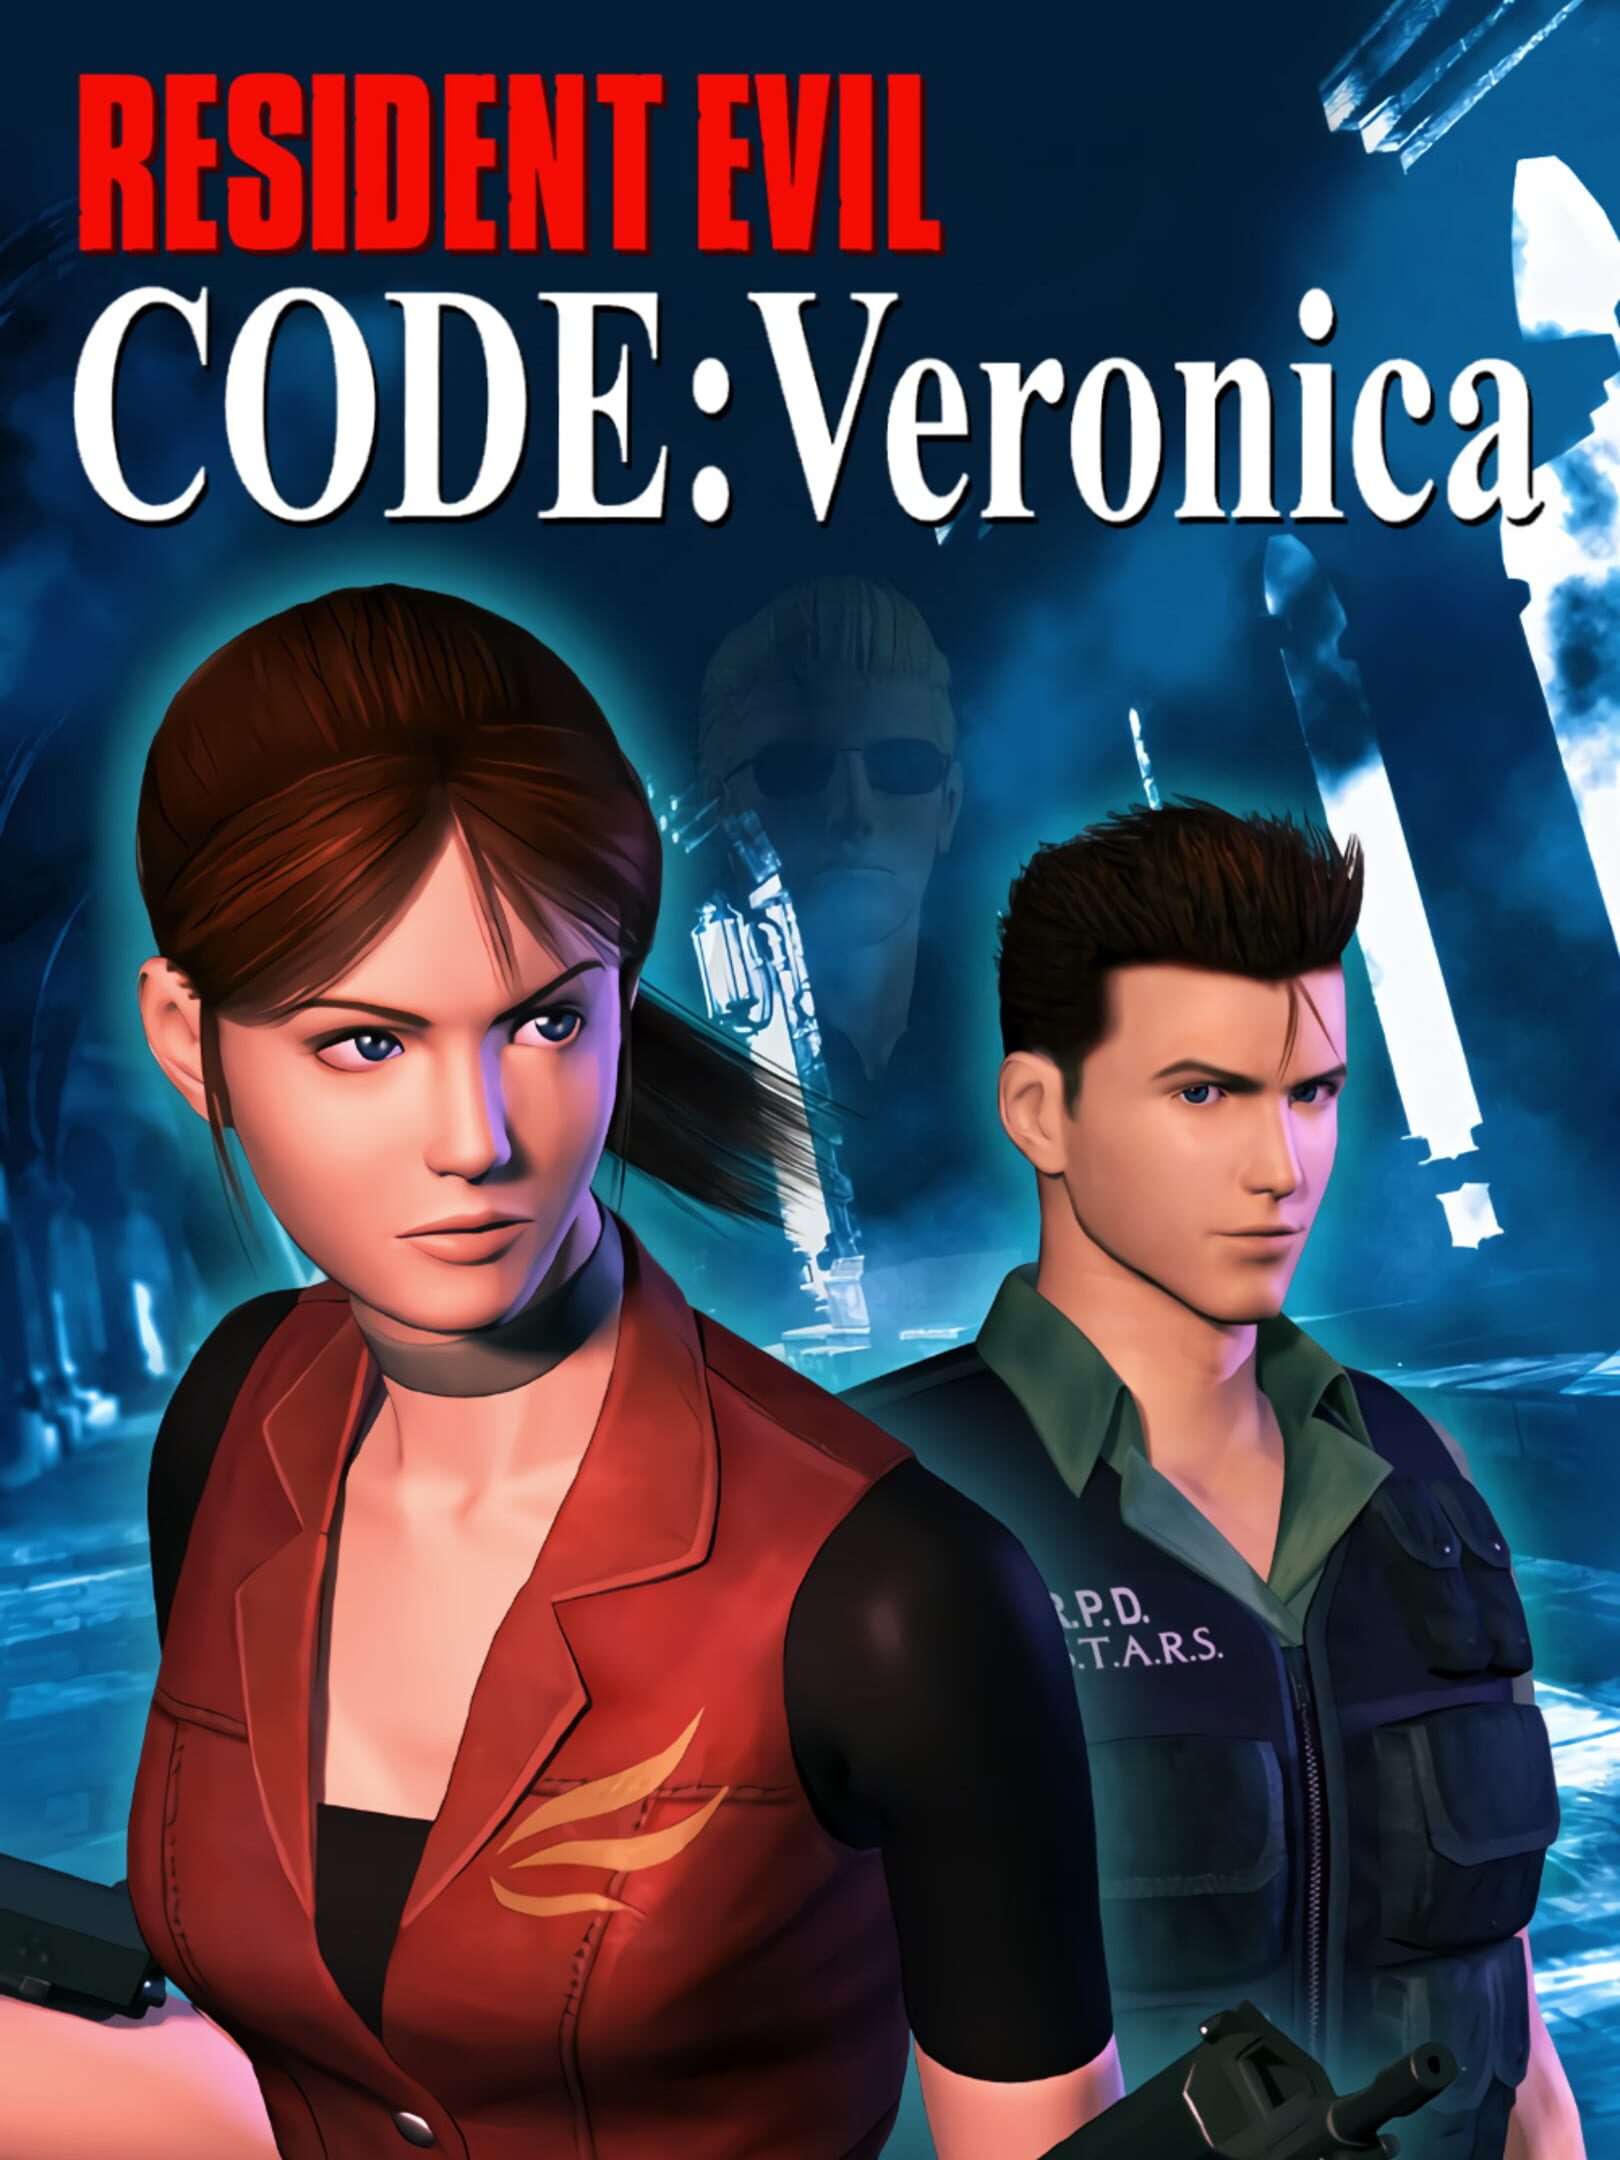 Resident Evil: Code Veronica News, Guides, Walkthrough, Screenshots, and Reviews